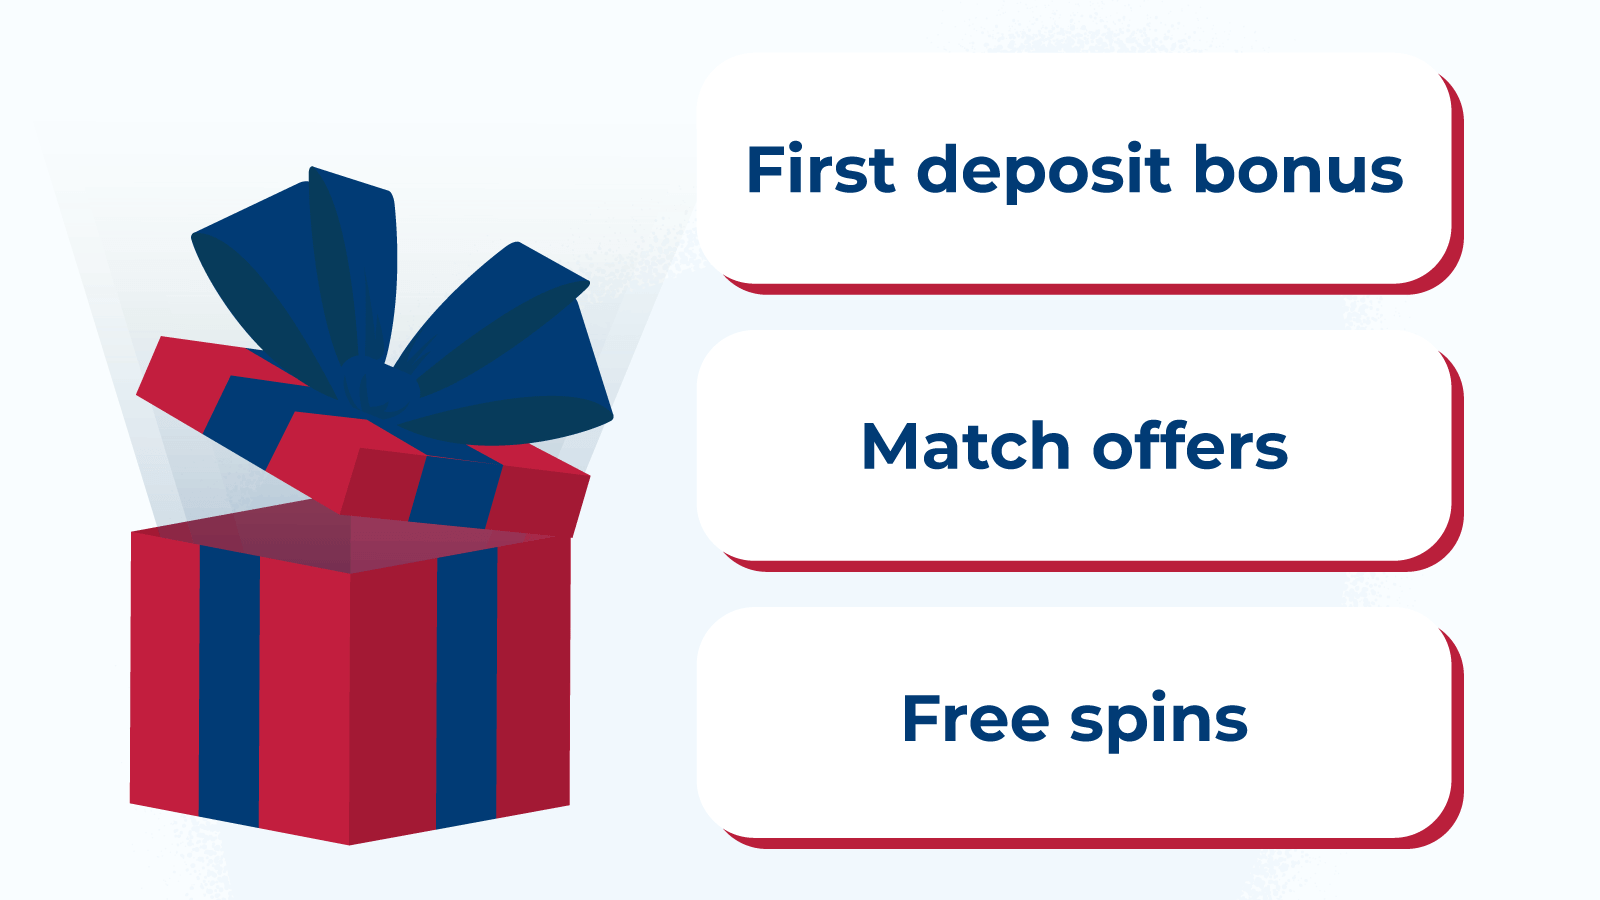 3.Types of first deposit bonuses